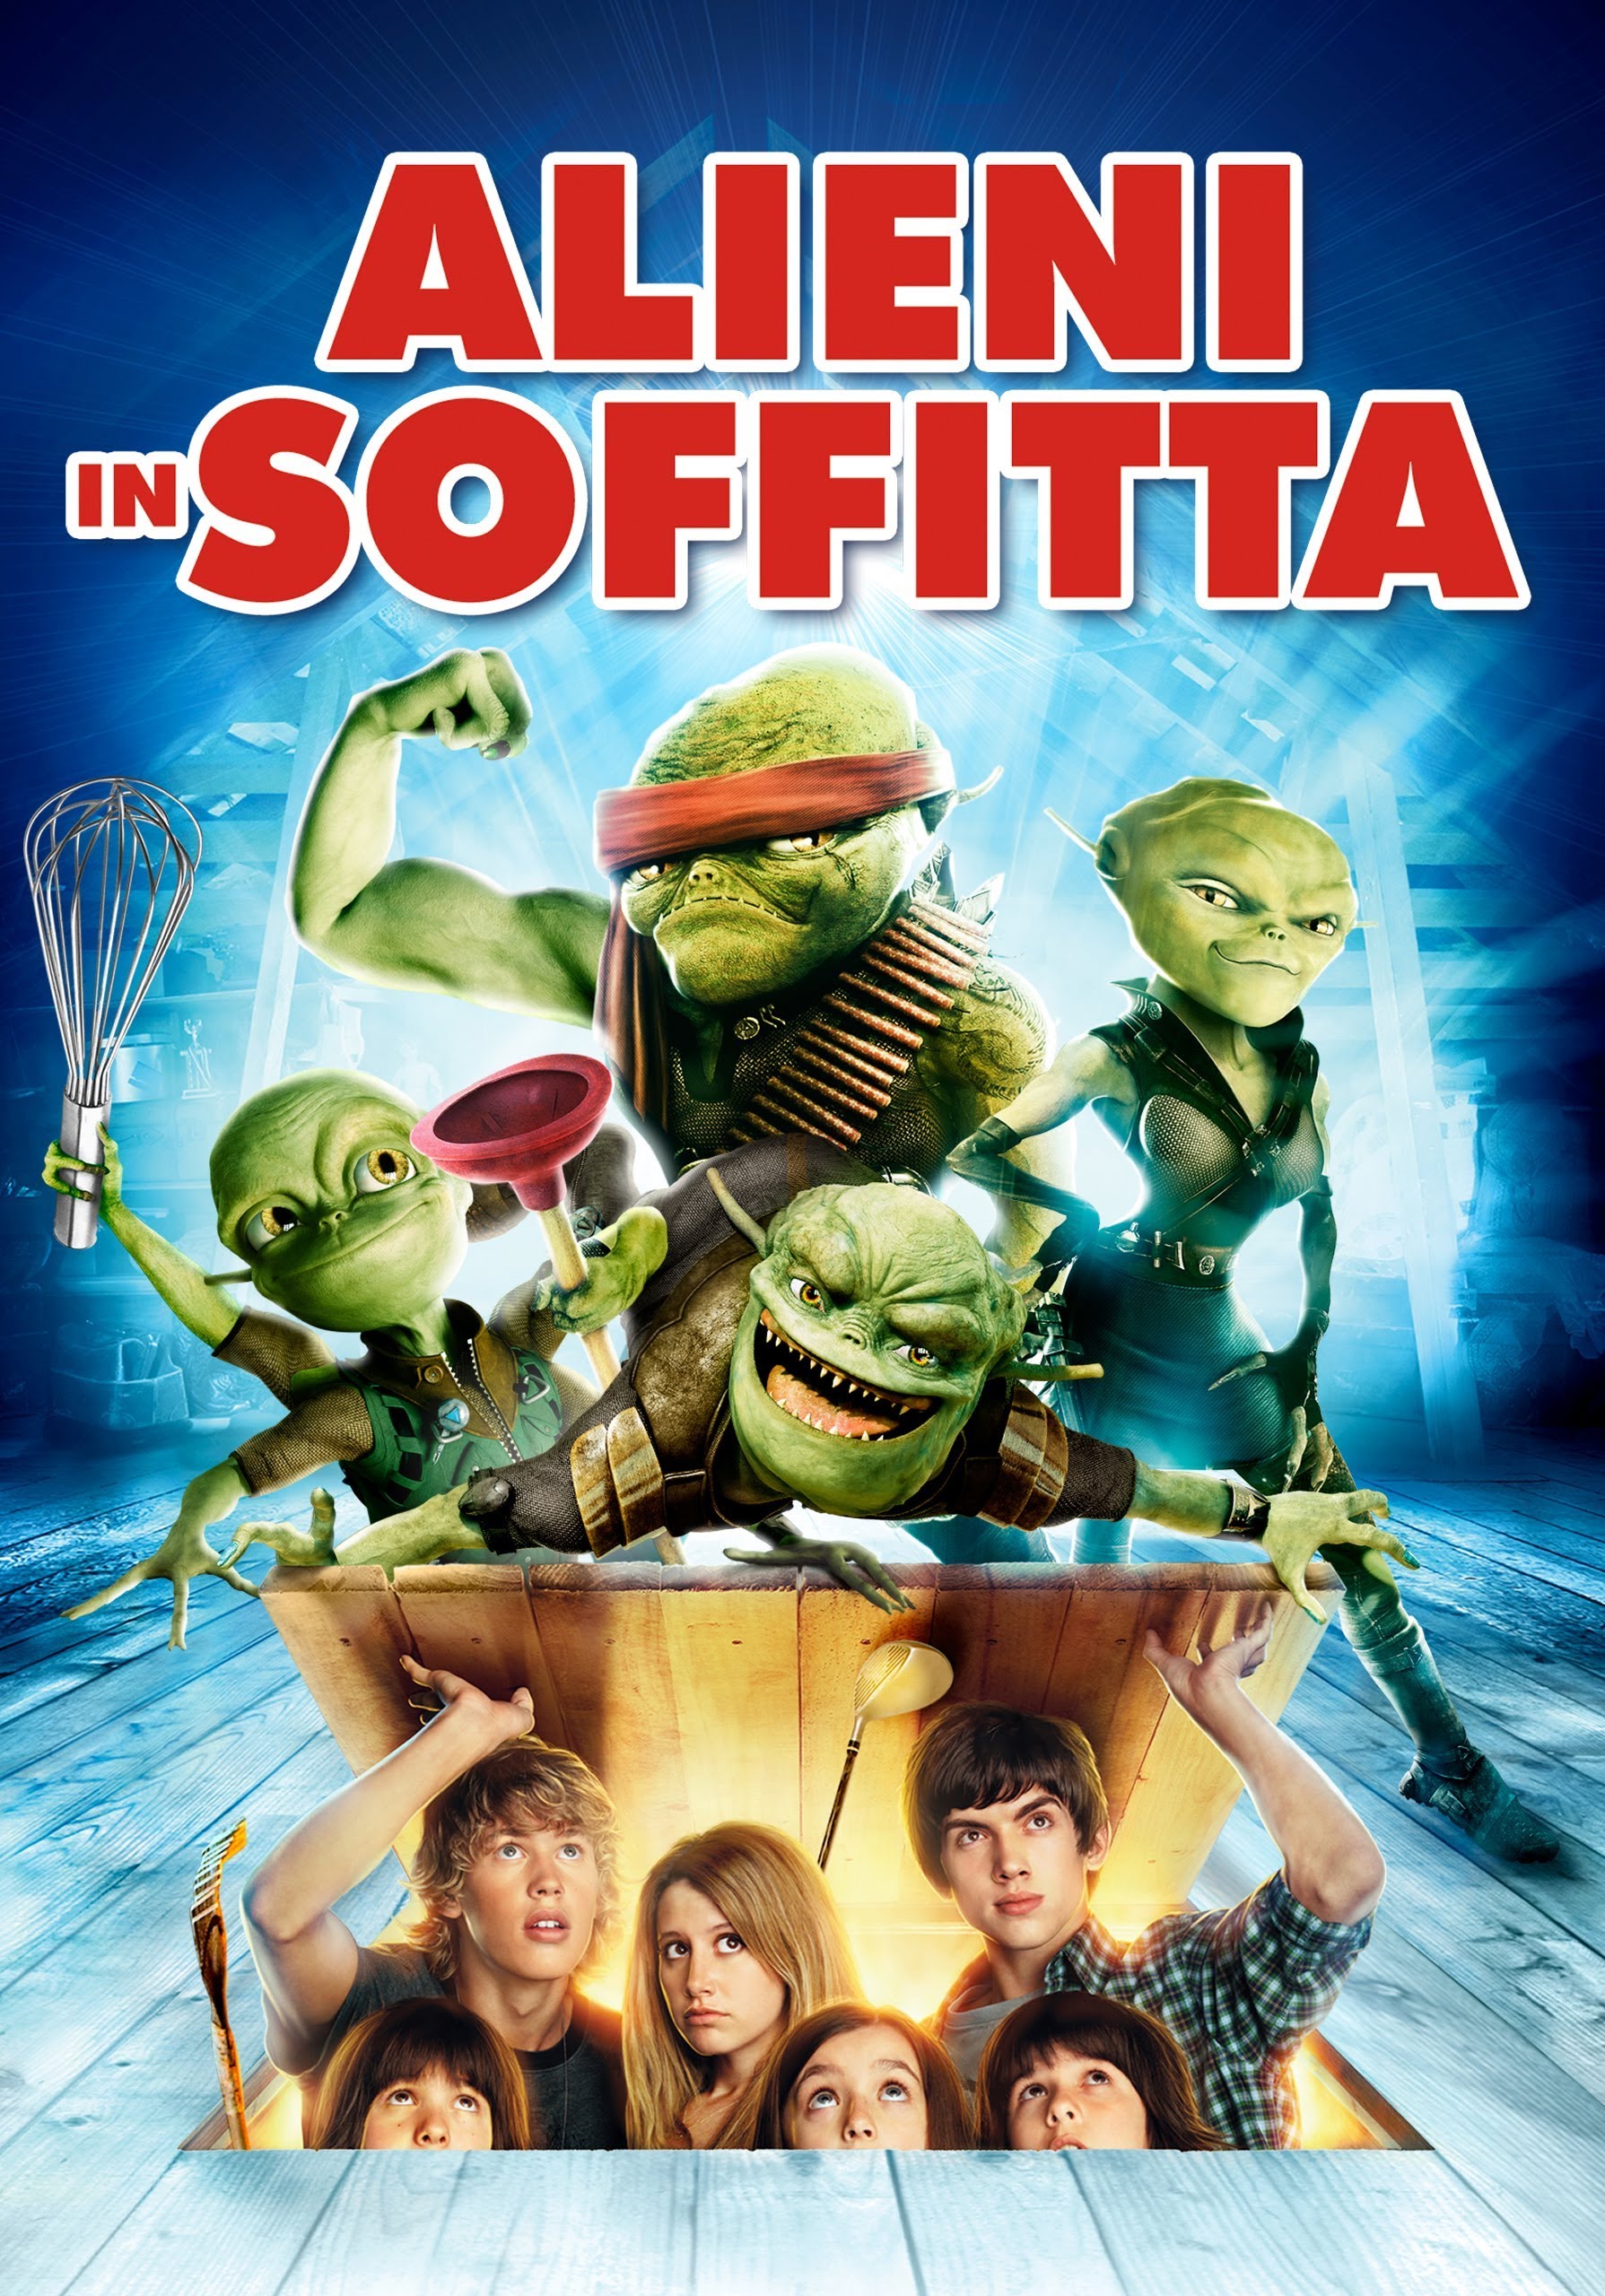 Alieni in soffitta [HD] (2009)